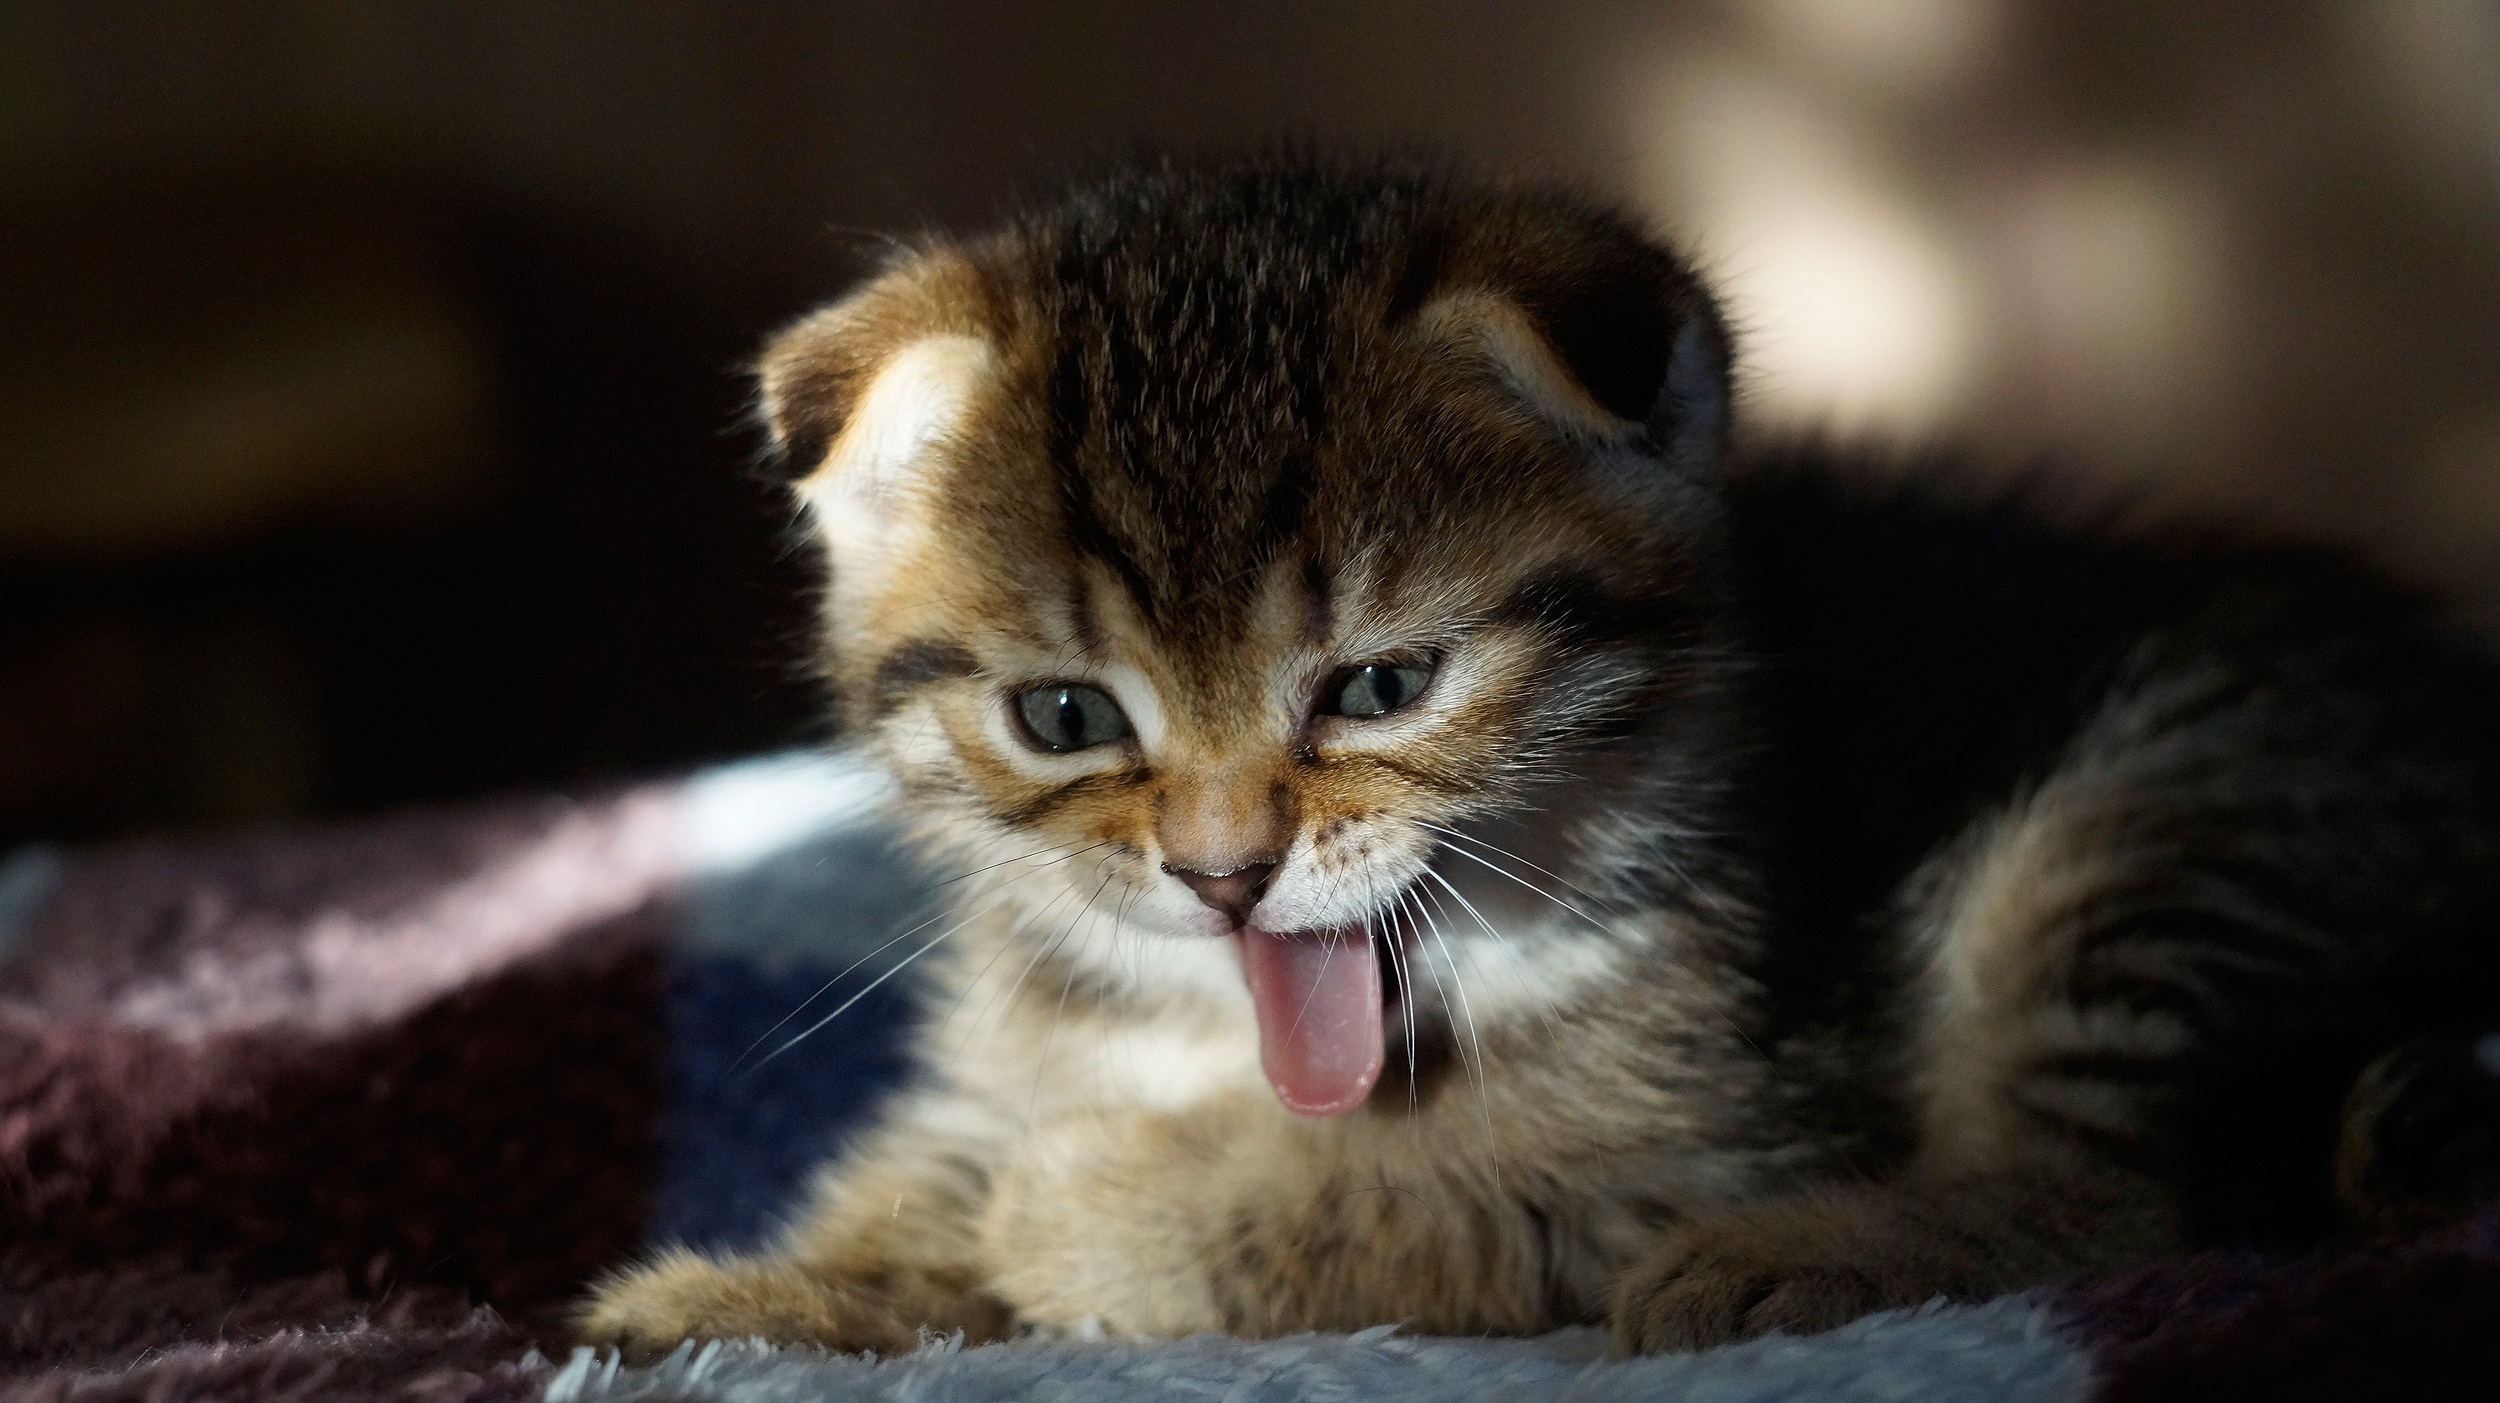 General 2500x1403 animals mammals cats tongues tongue out feline kittens closeup